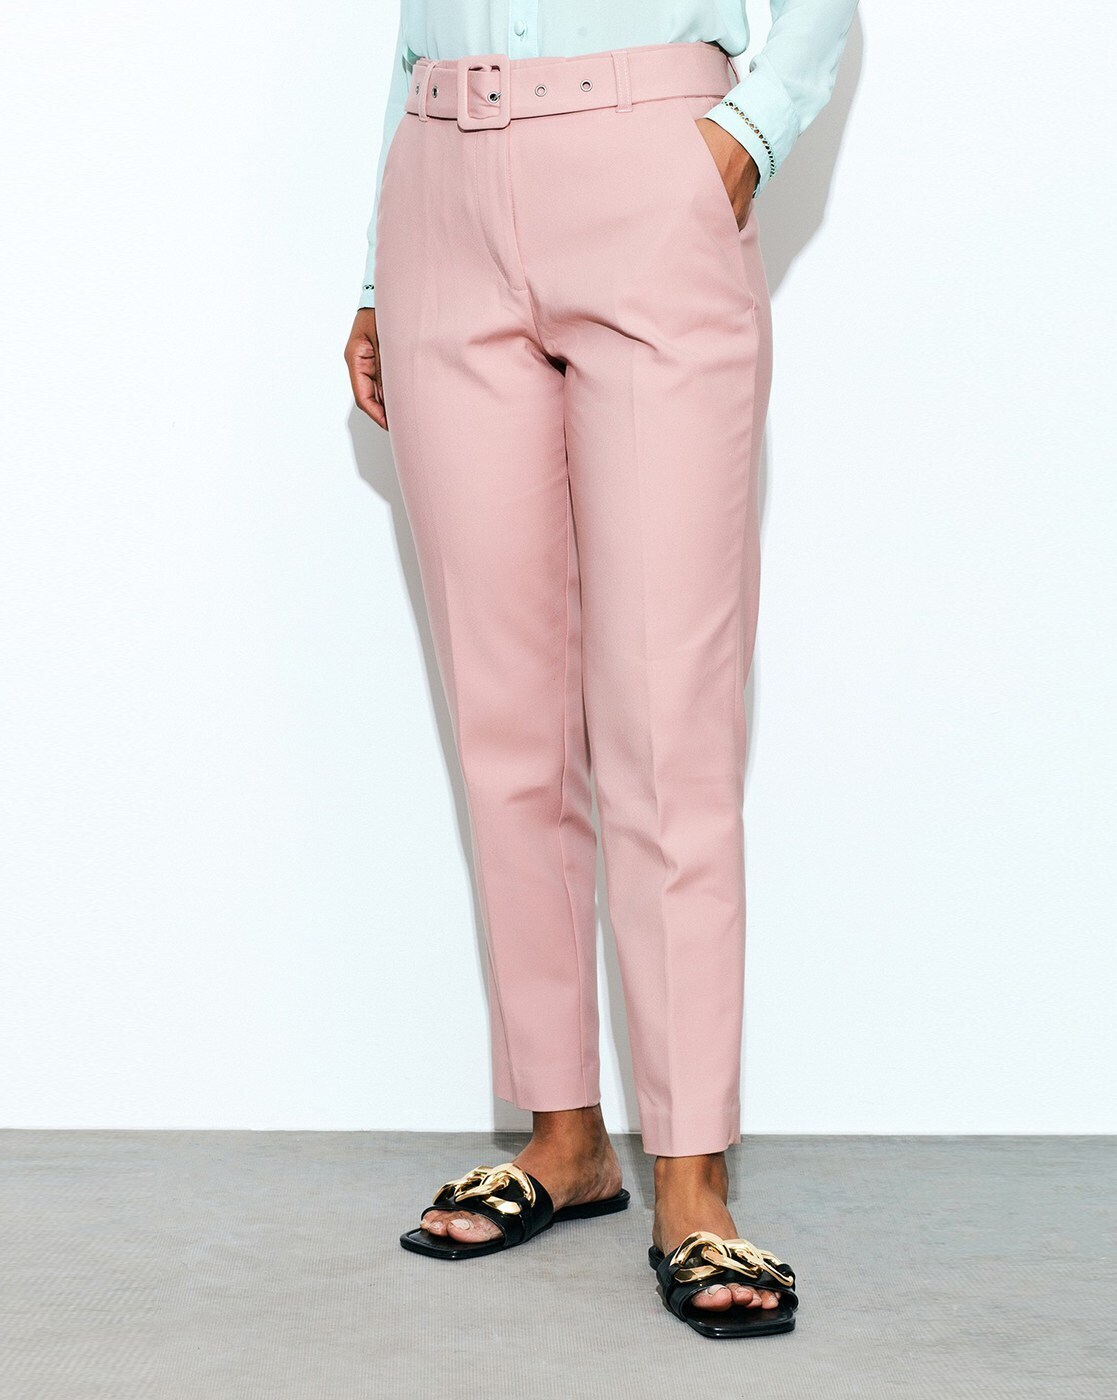 Zara NWT Pink and Black Houndstooth Mini Flare Trousers Women's XS | eBay